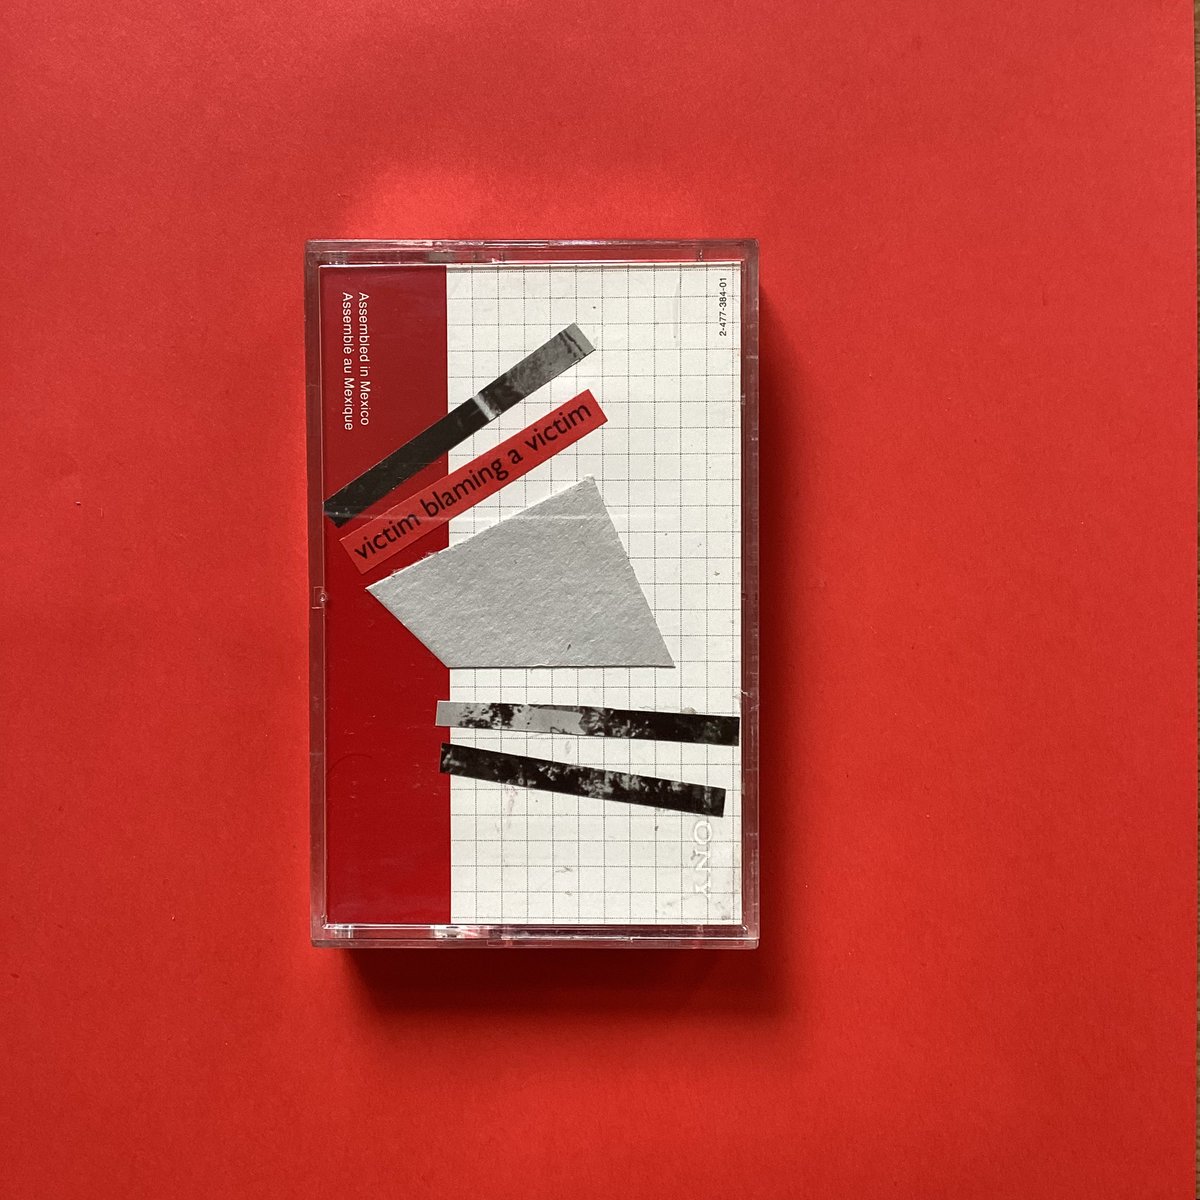 Available Now!
#cassetterelease #cassettelabel #tapelabel #audiocollage #mixtape #C60 #recyclereuse 

staaltape.bandcamp.com/album/a-tape-f…